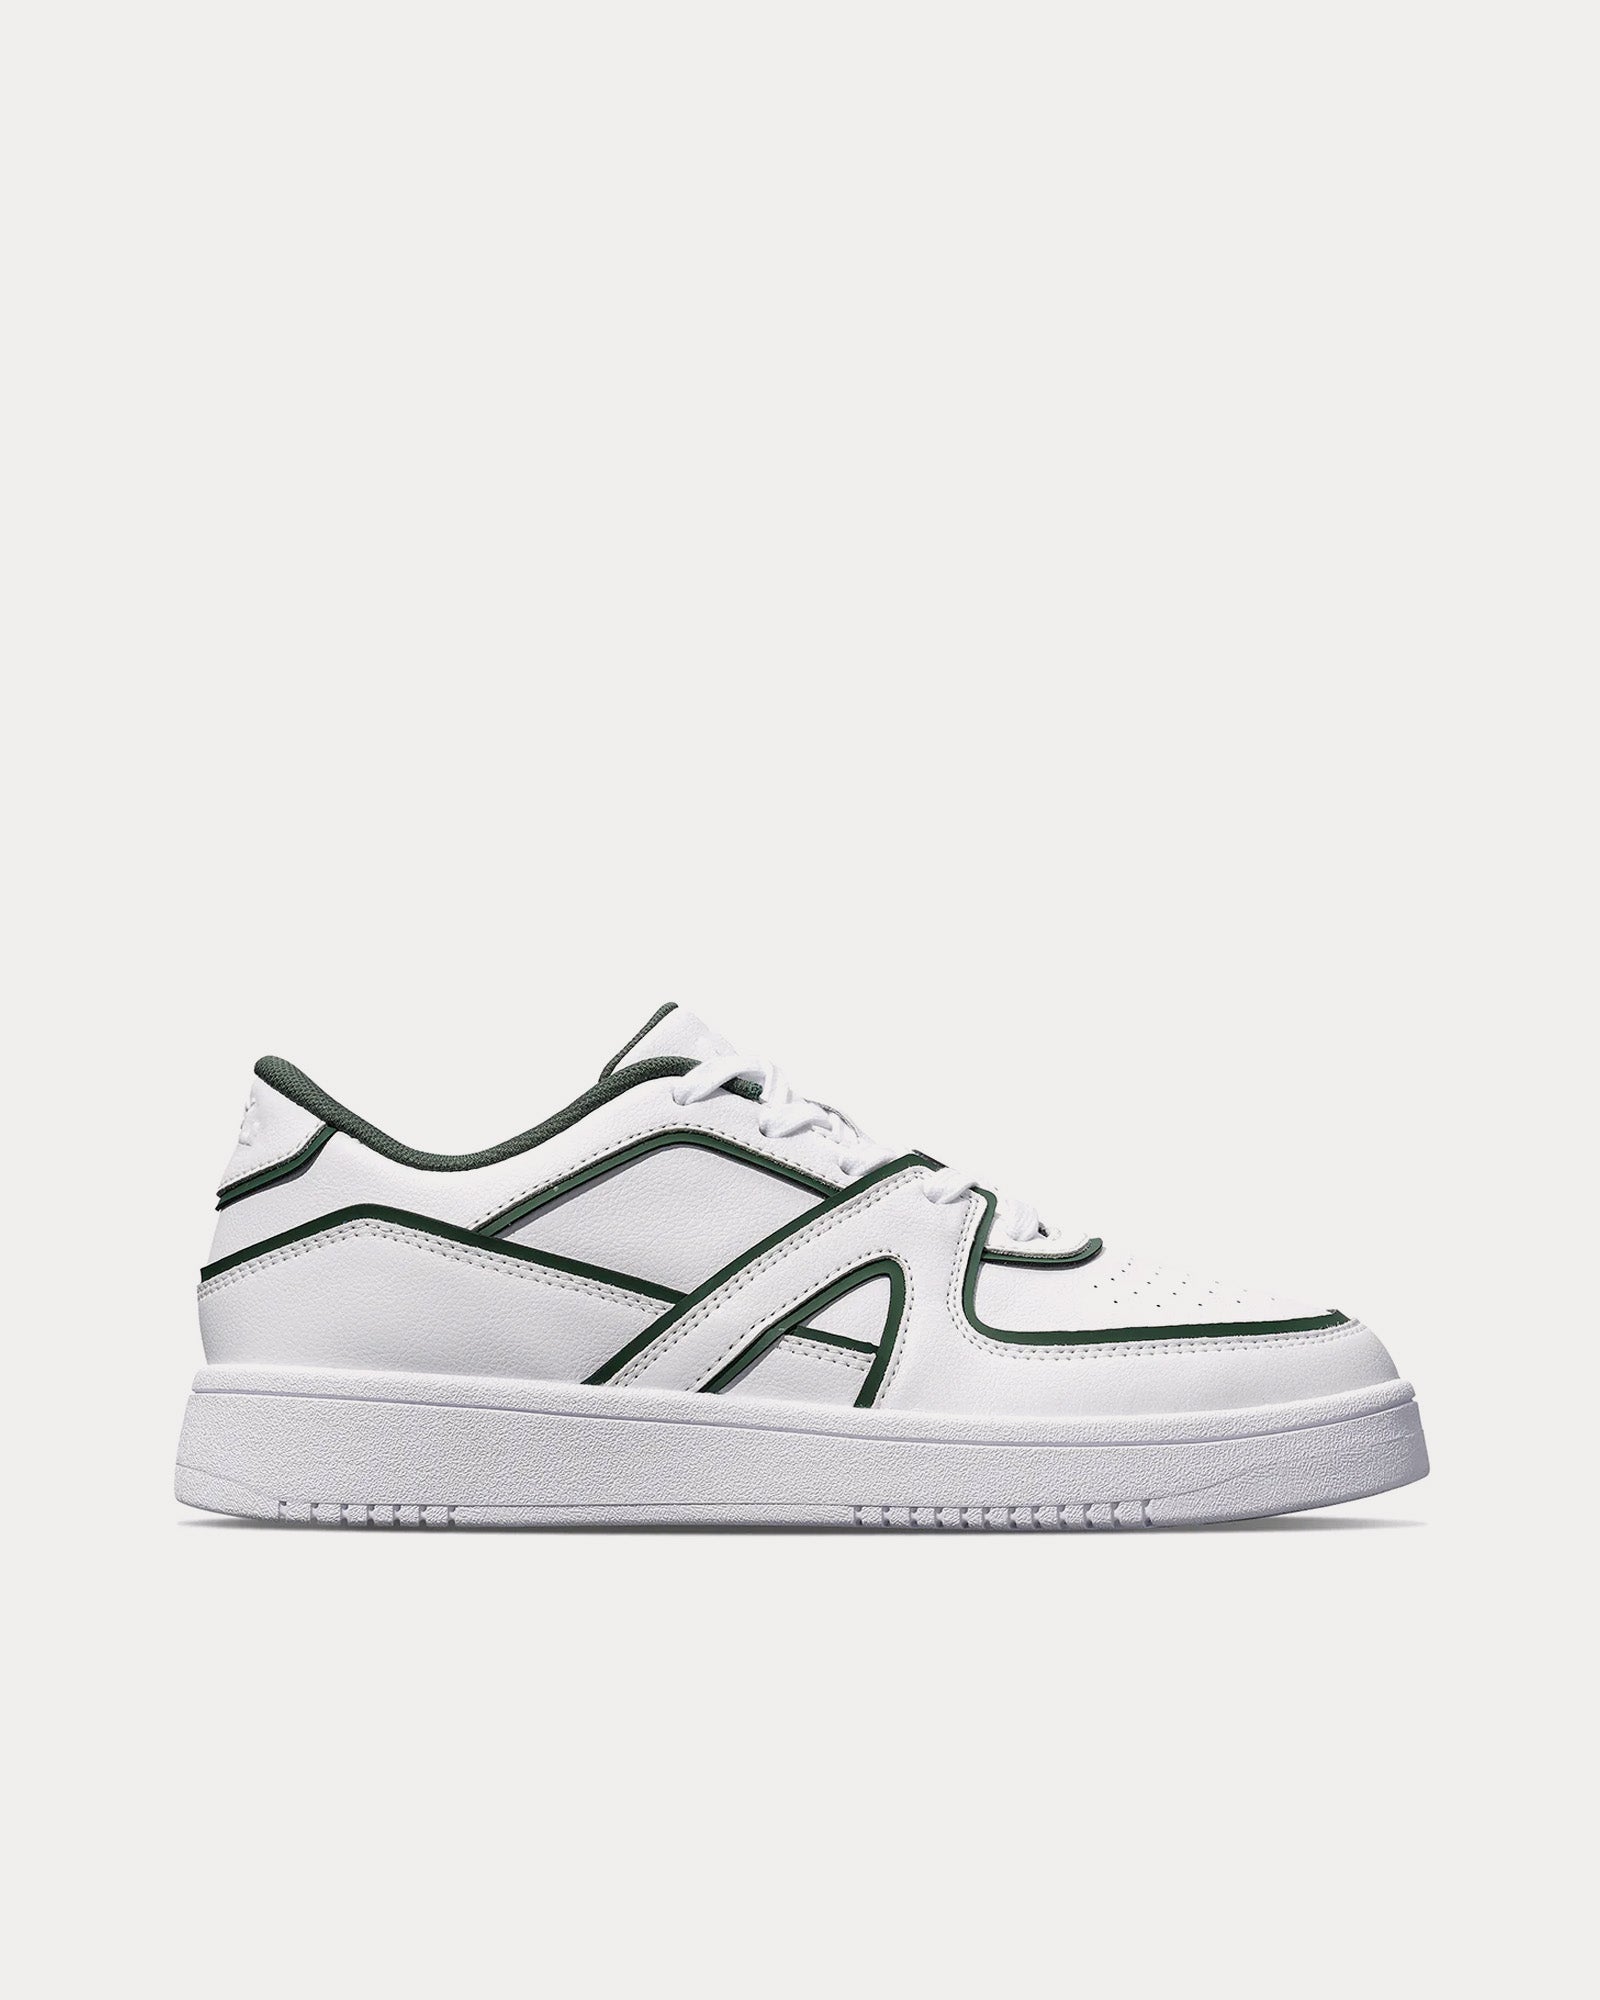 Athletic Propulsion Labs - Nostalgia '87 White / Dark Green Low Top Sneakers